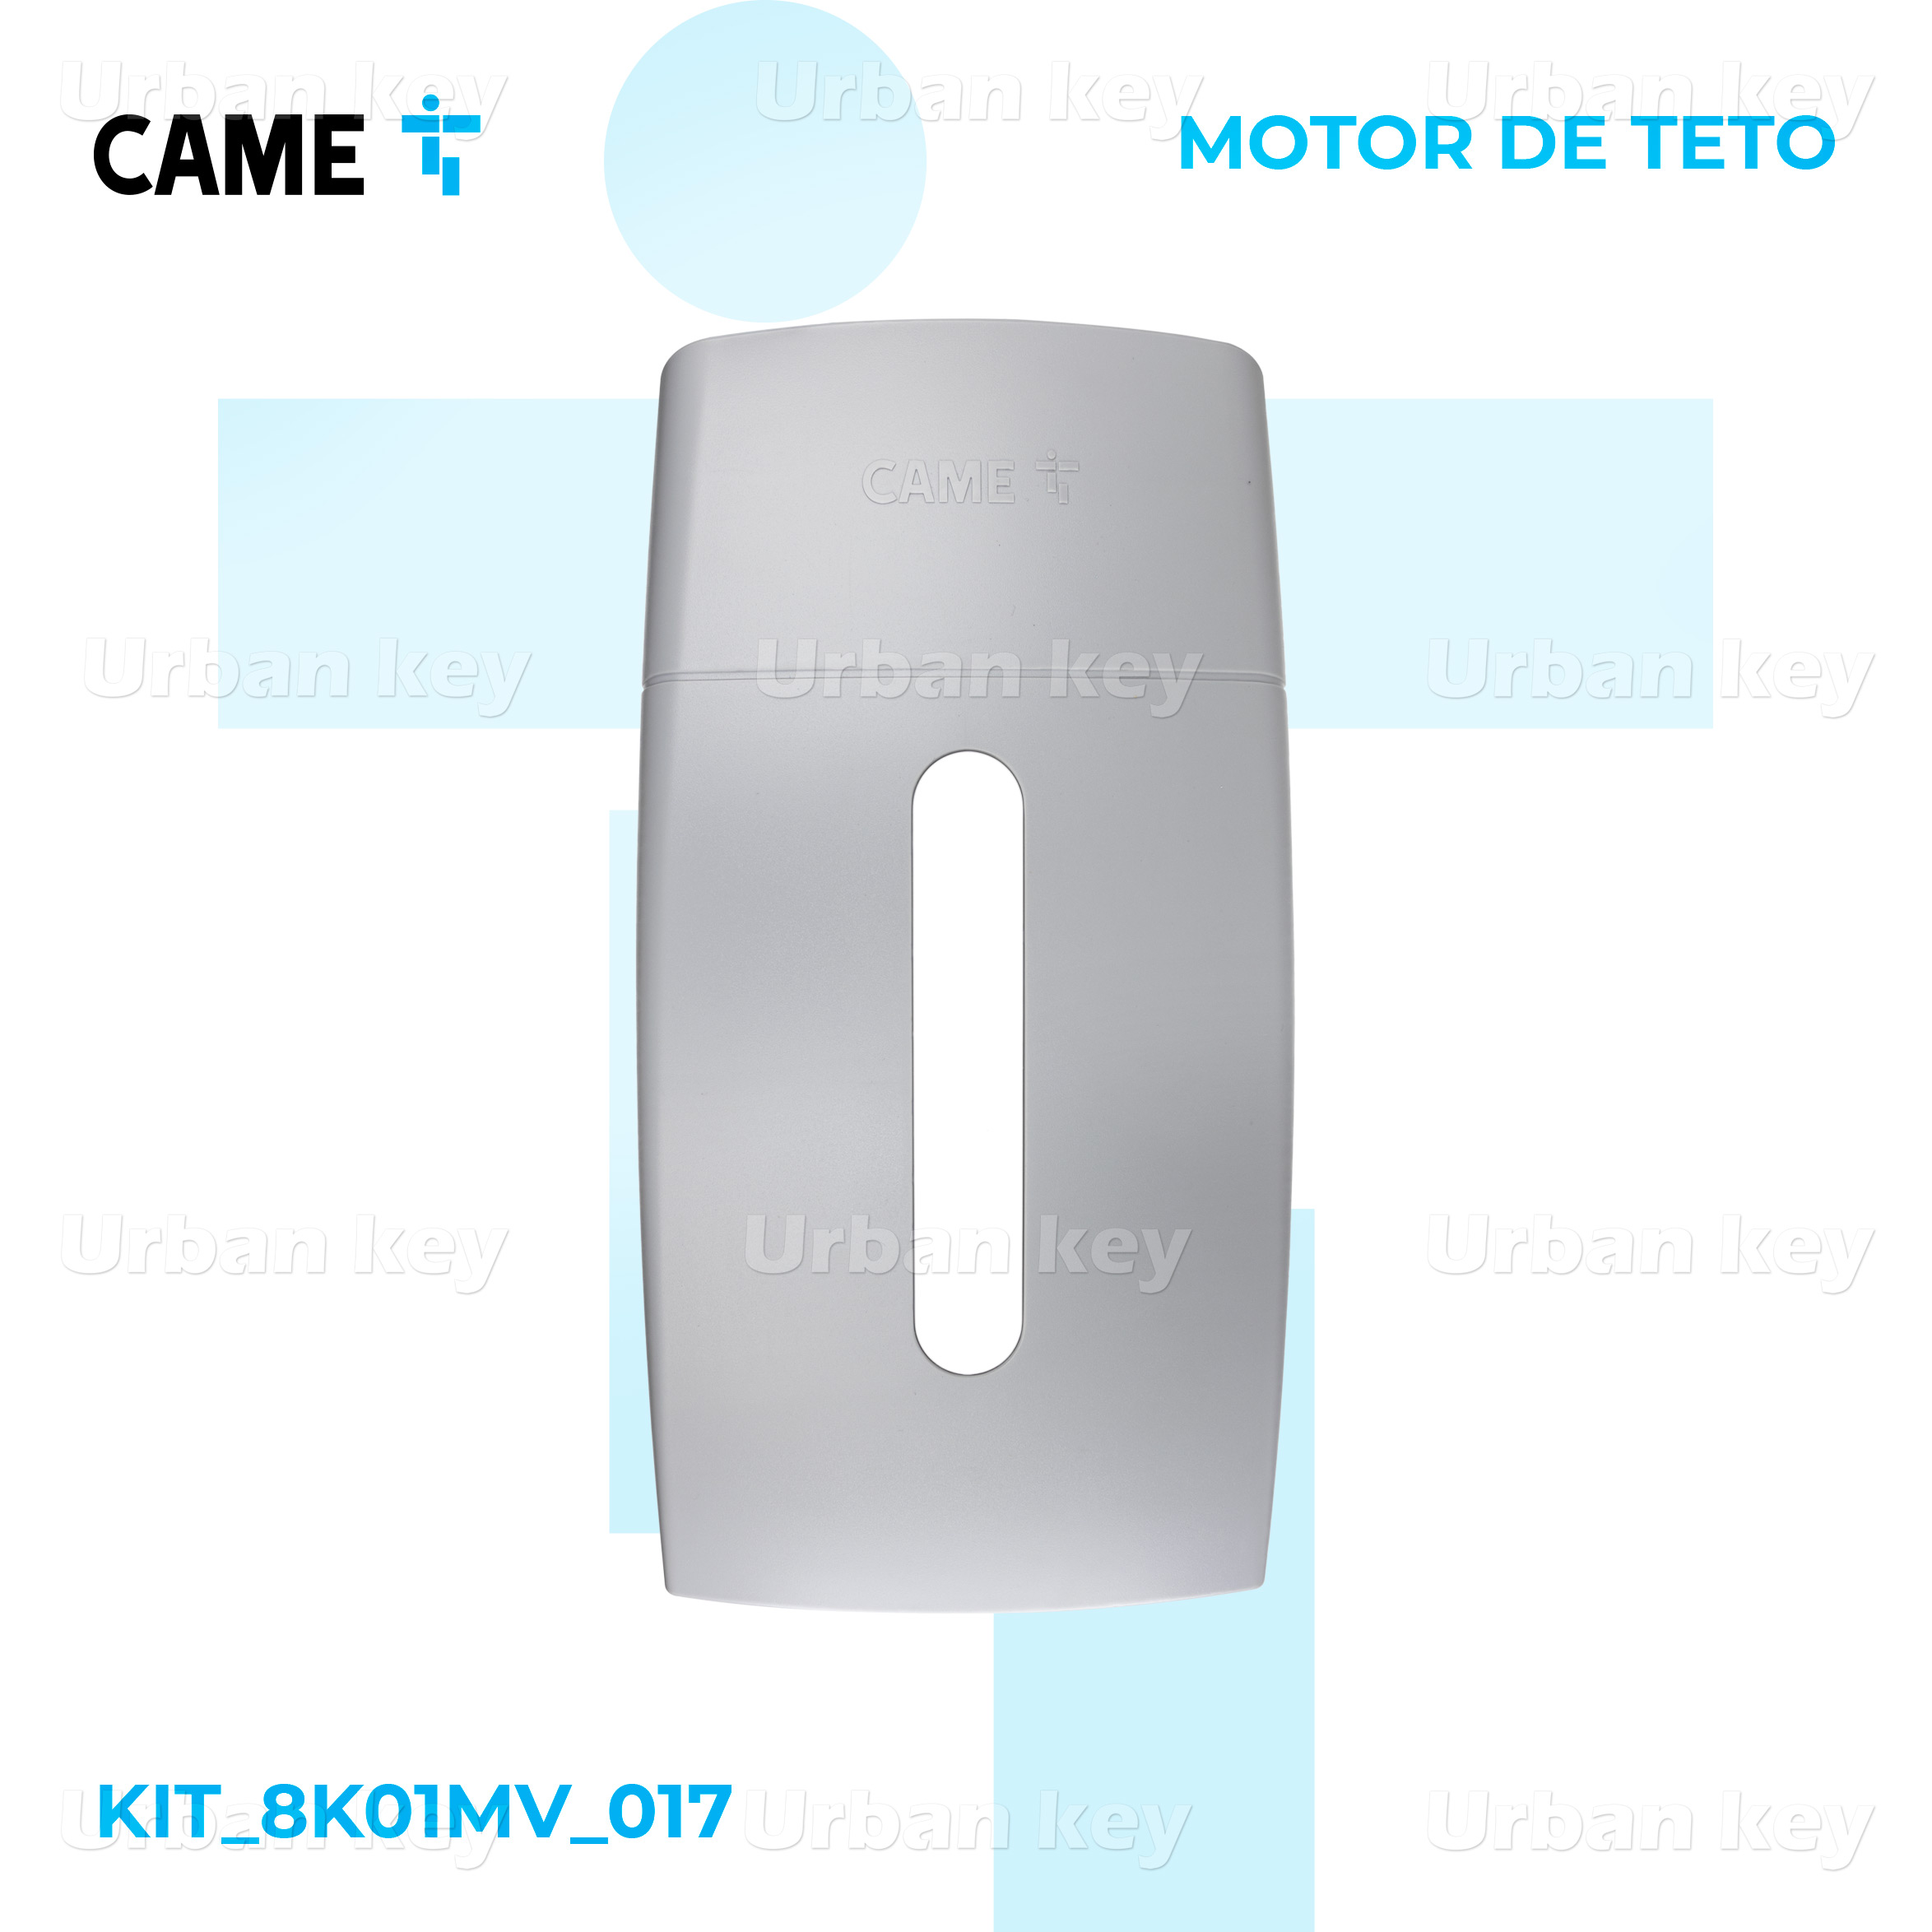 KIT MOTOR DE TETO 800N CAME